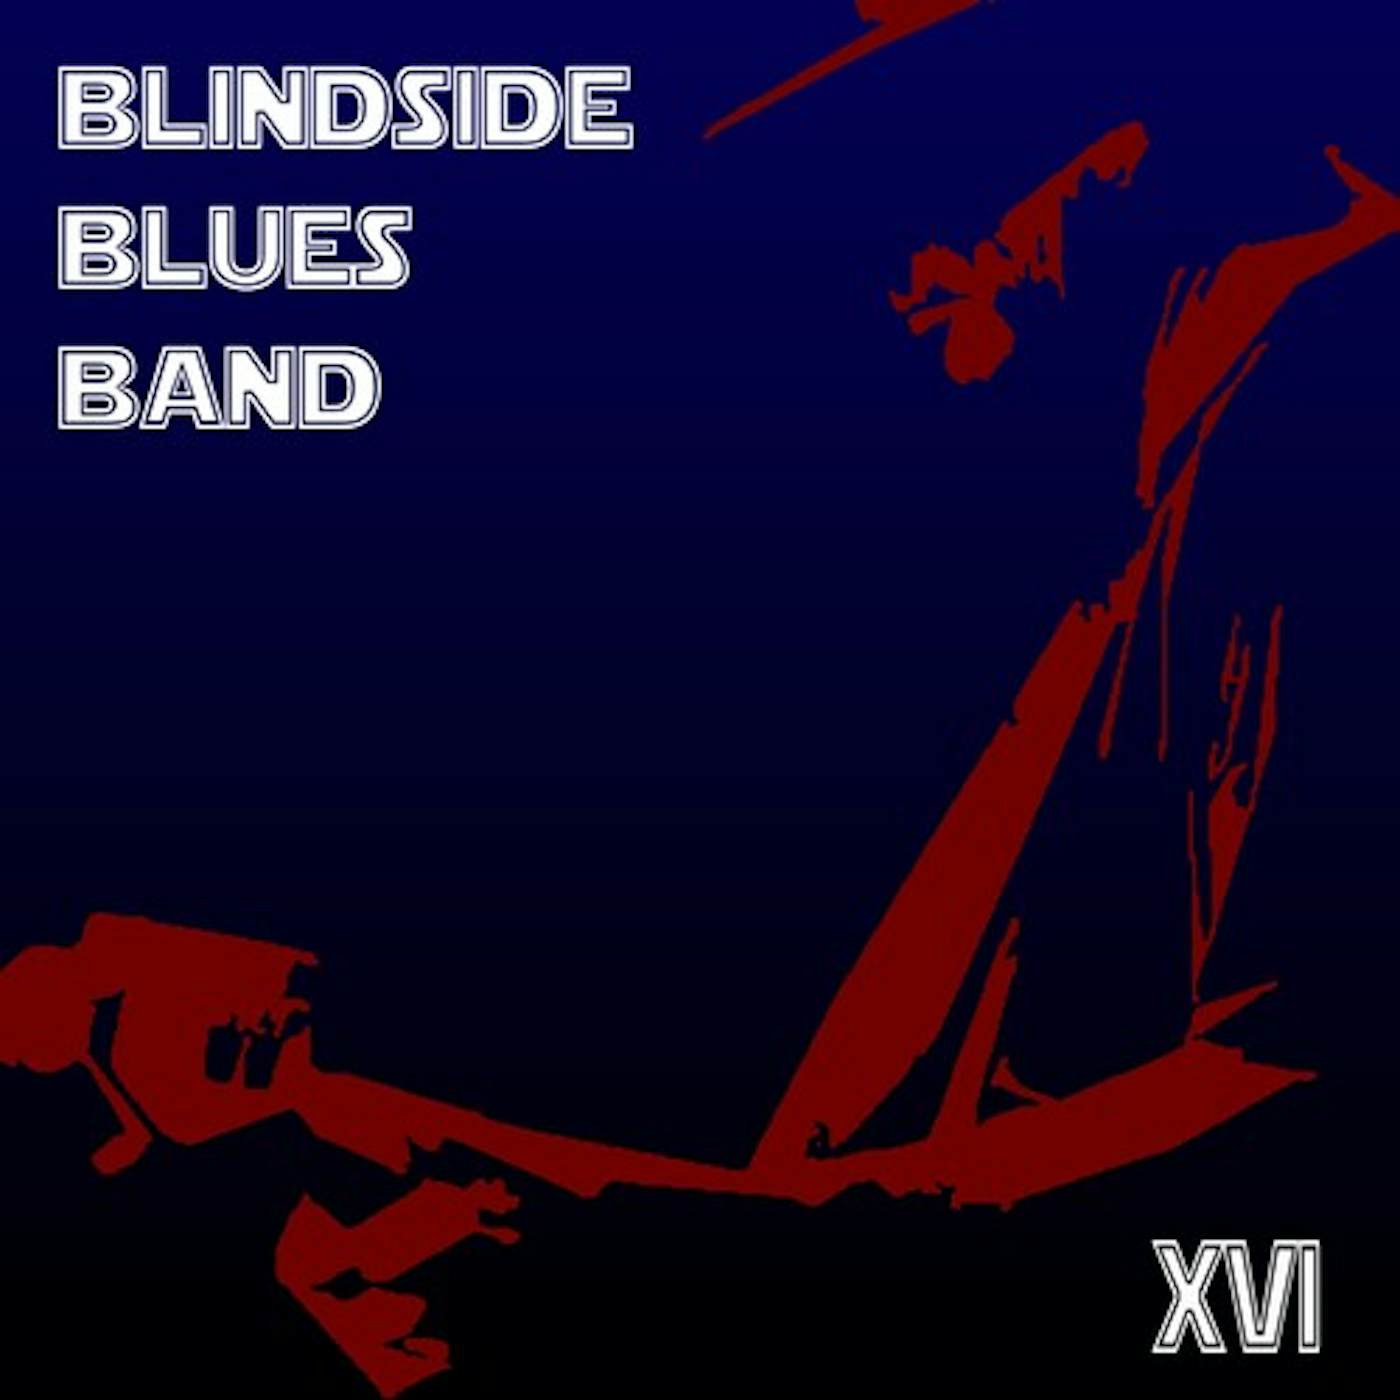 Blindside Blues Band XVI CD